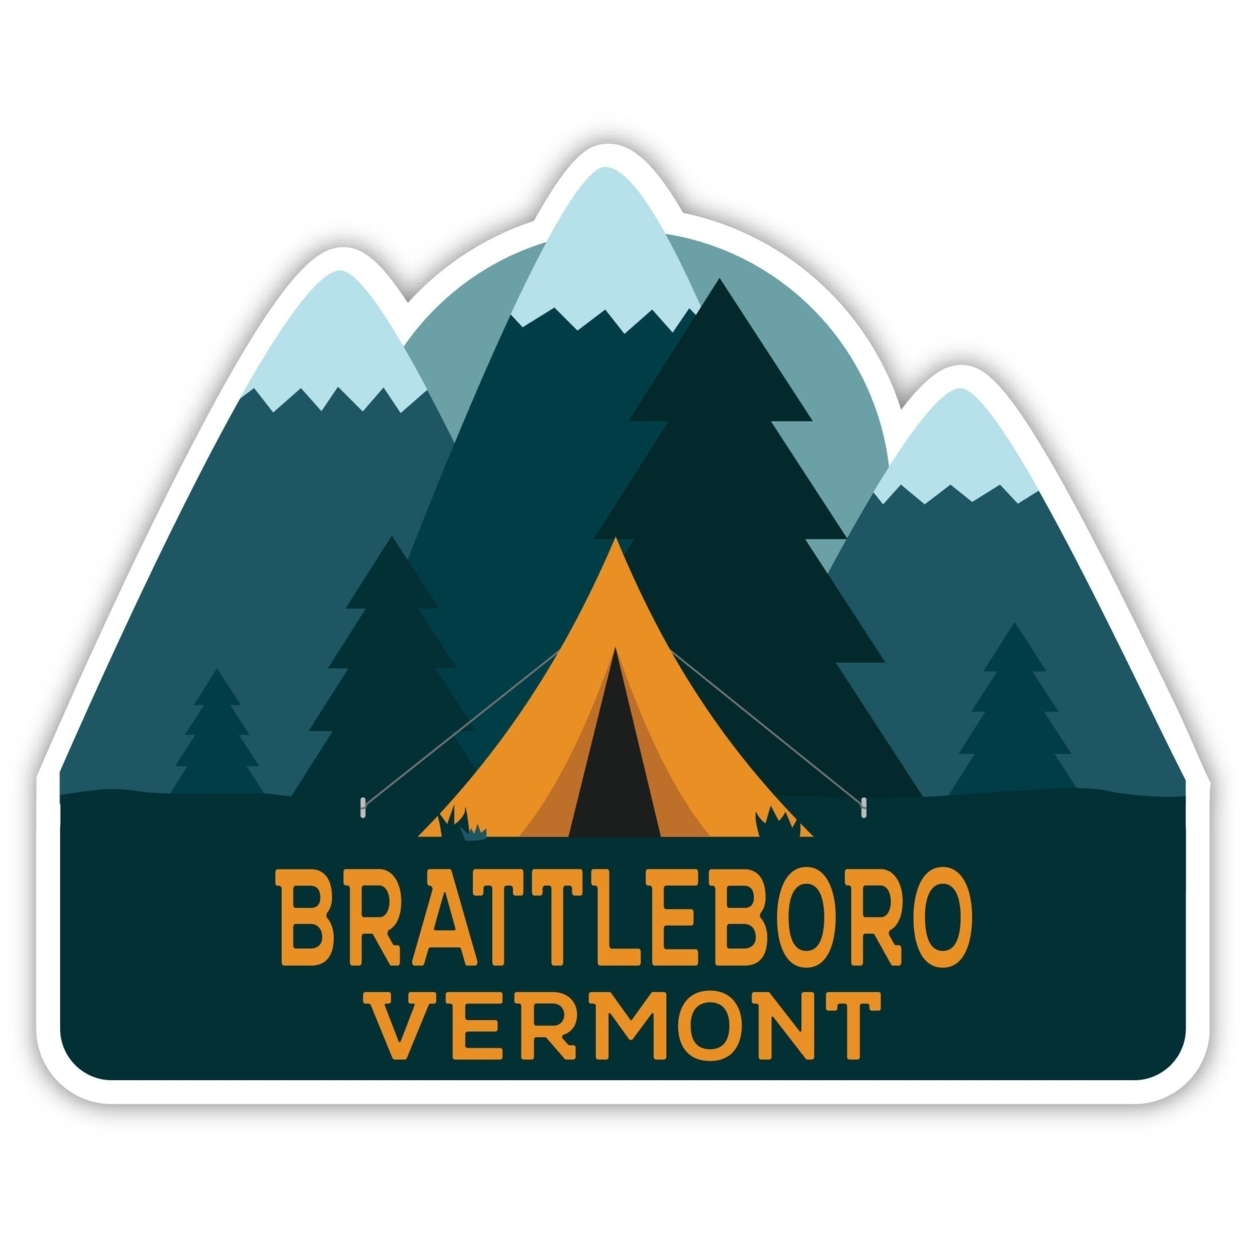 Brattleboro Vermont Souvenir Decorative Stickers (Choose Theme And Size) - 4-Pack, 8-Inch, Tent